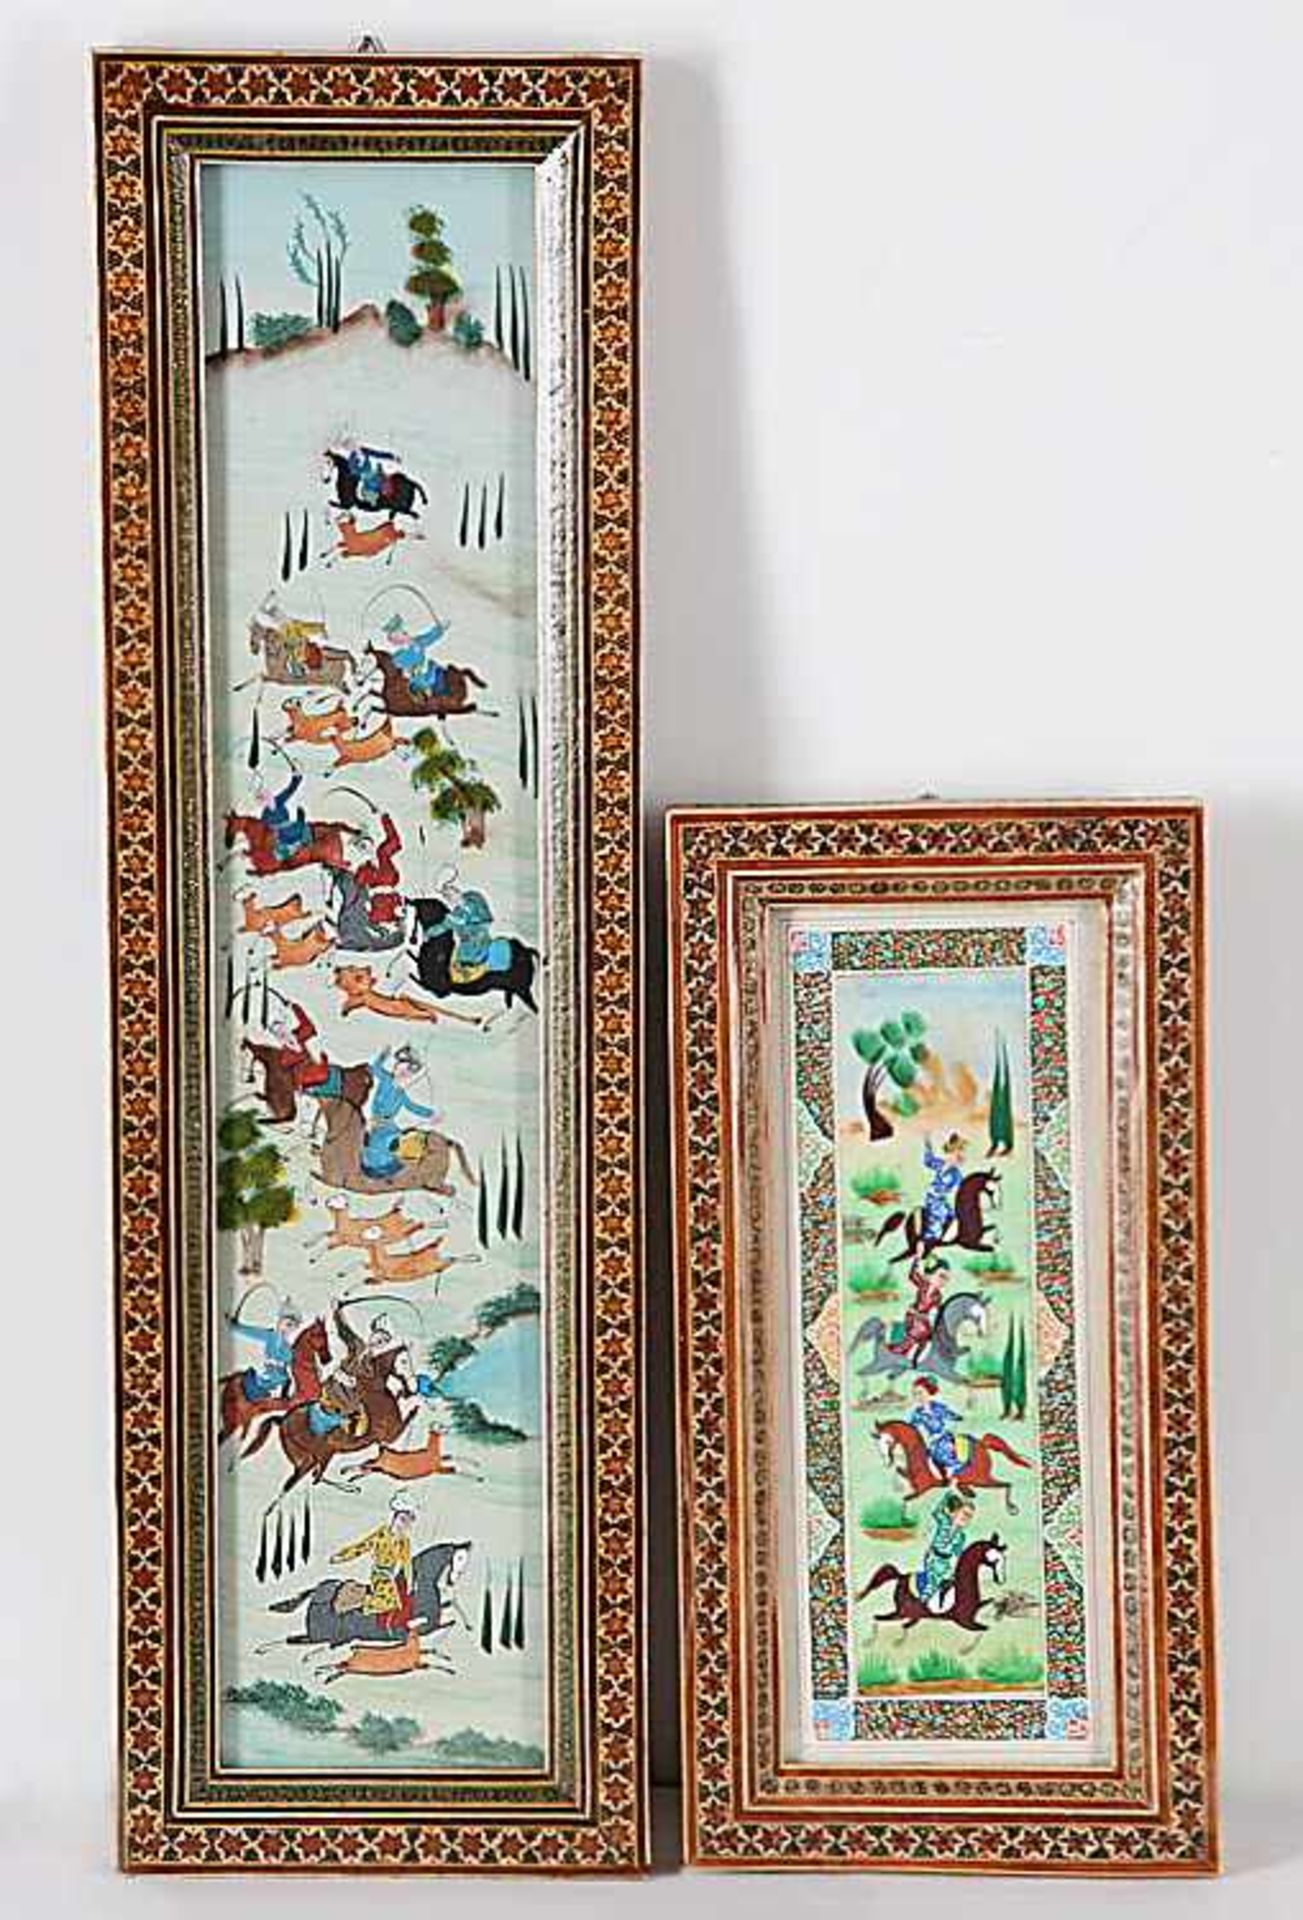 Zwei persische Miniaturmalereien